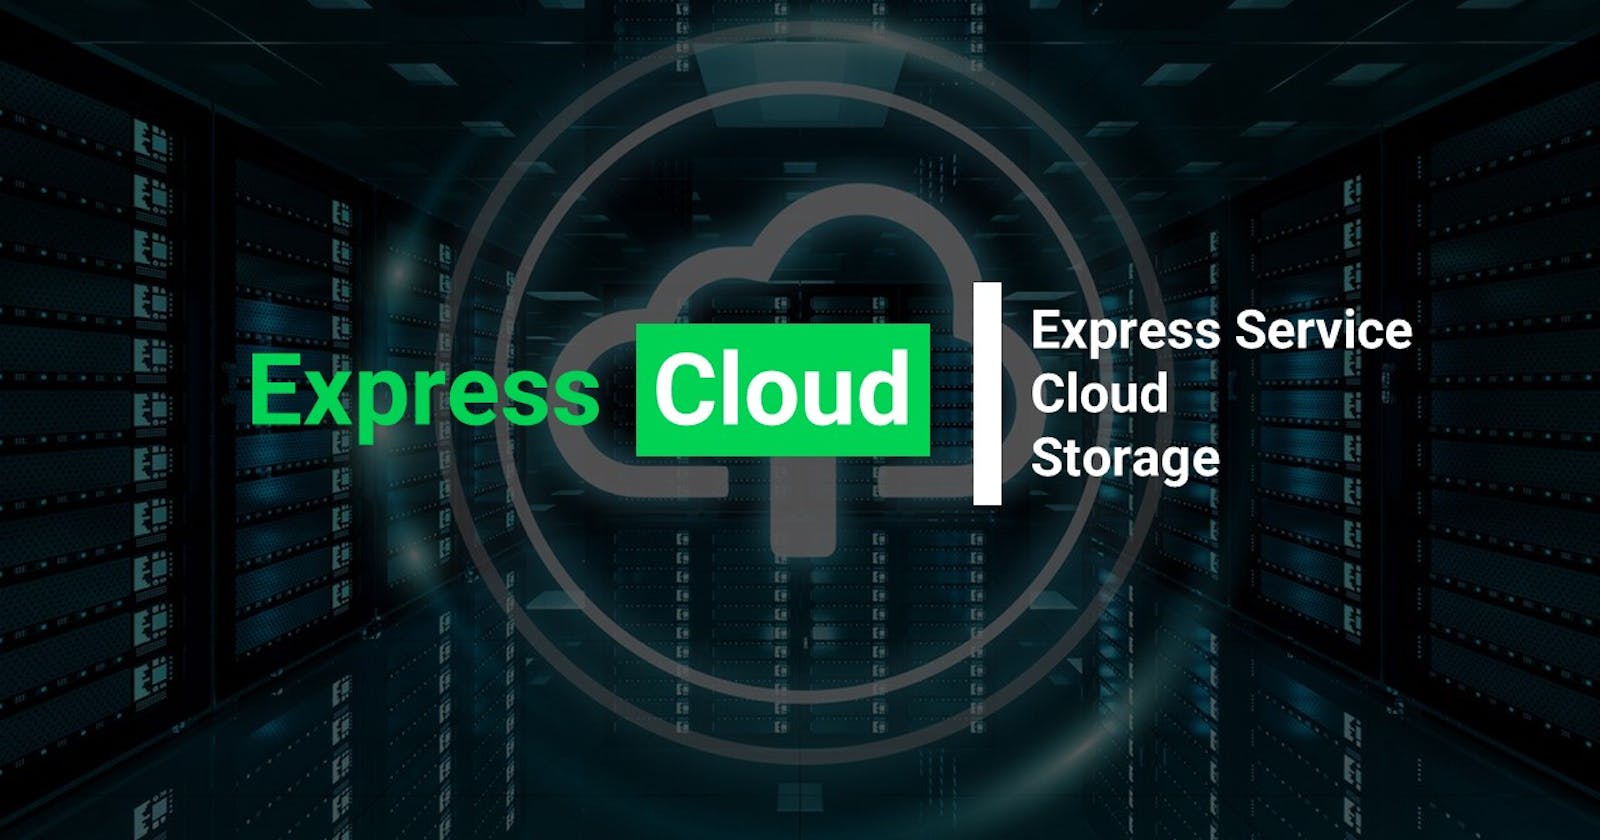 Express Service Cloud Storage